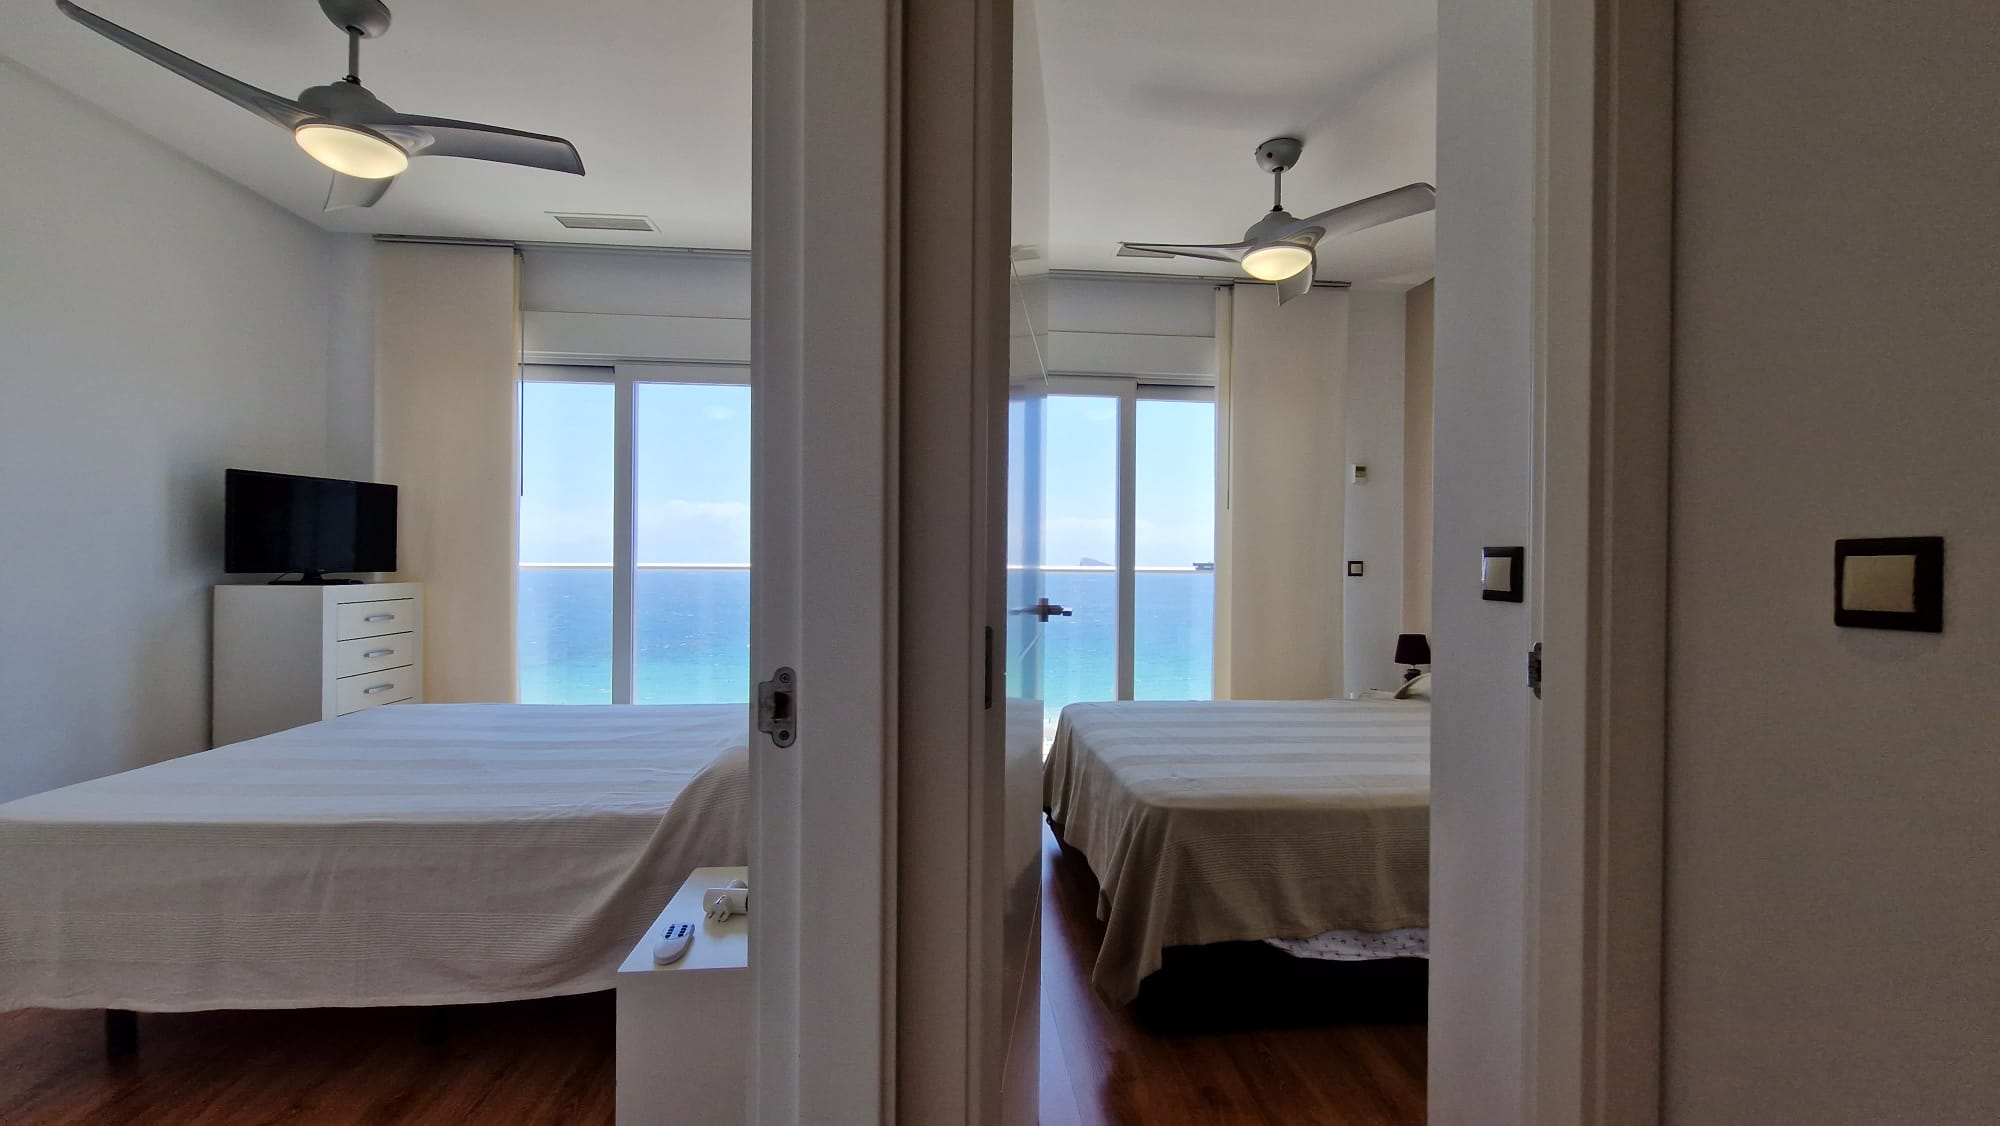 Frontline Beach Apartment Benidorm: Your Ideal Coastal Living Experience